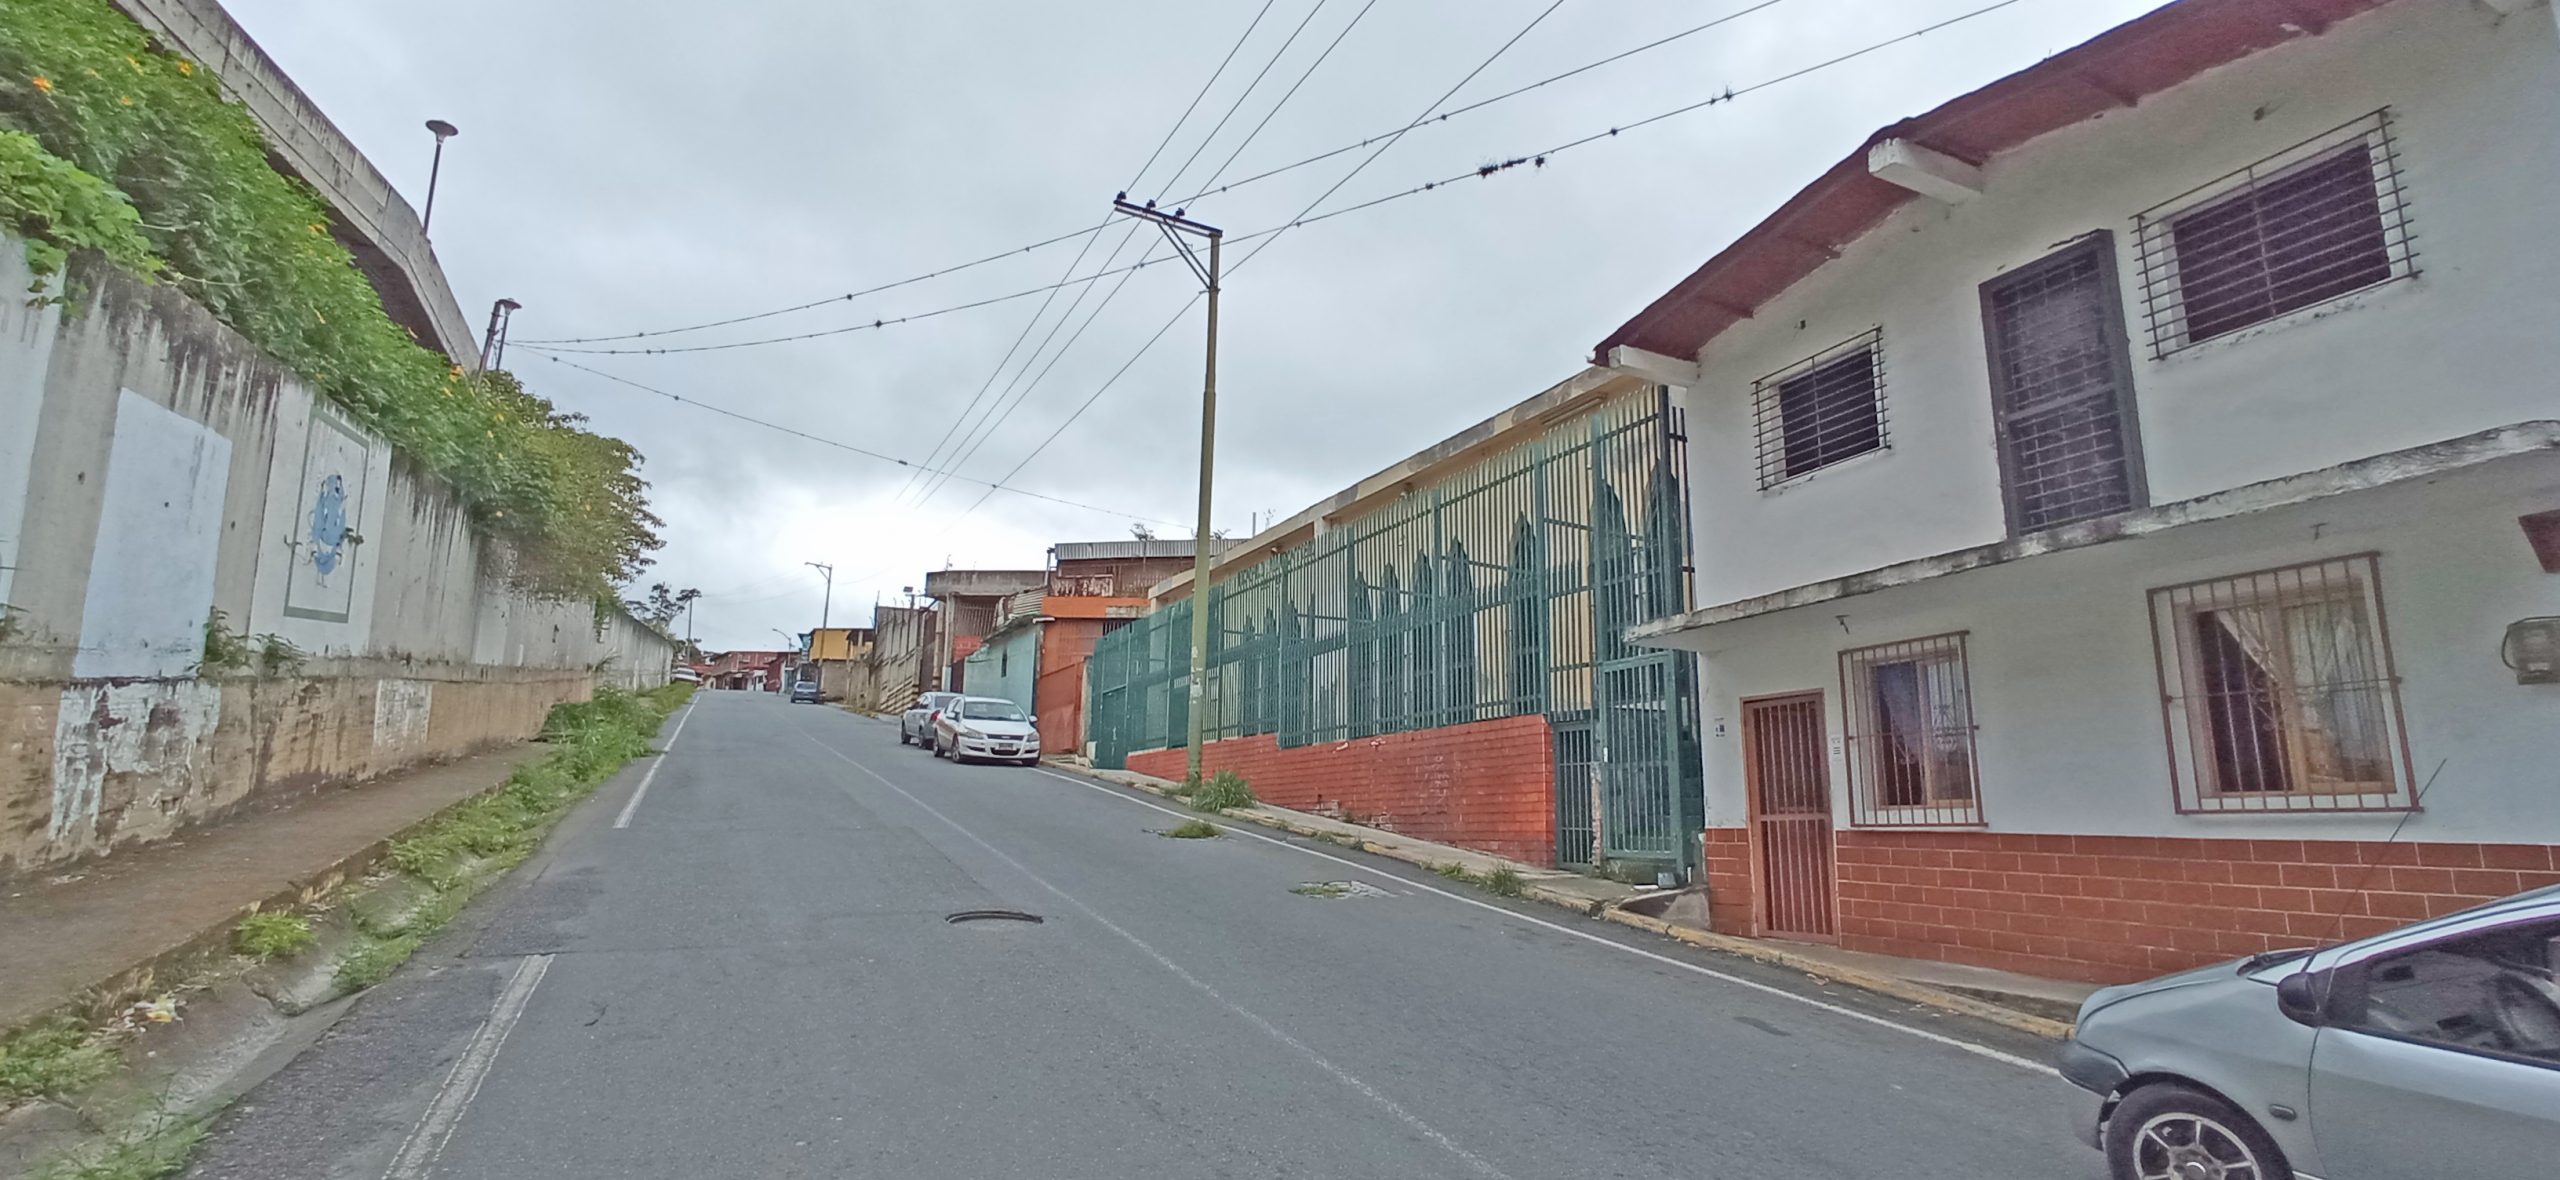 Apagones agobian a vecinos de Barrio Ayacucho